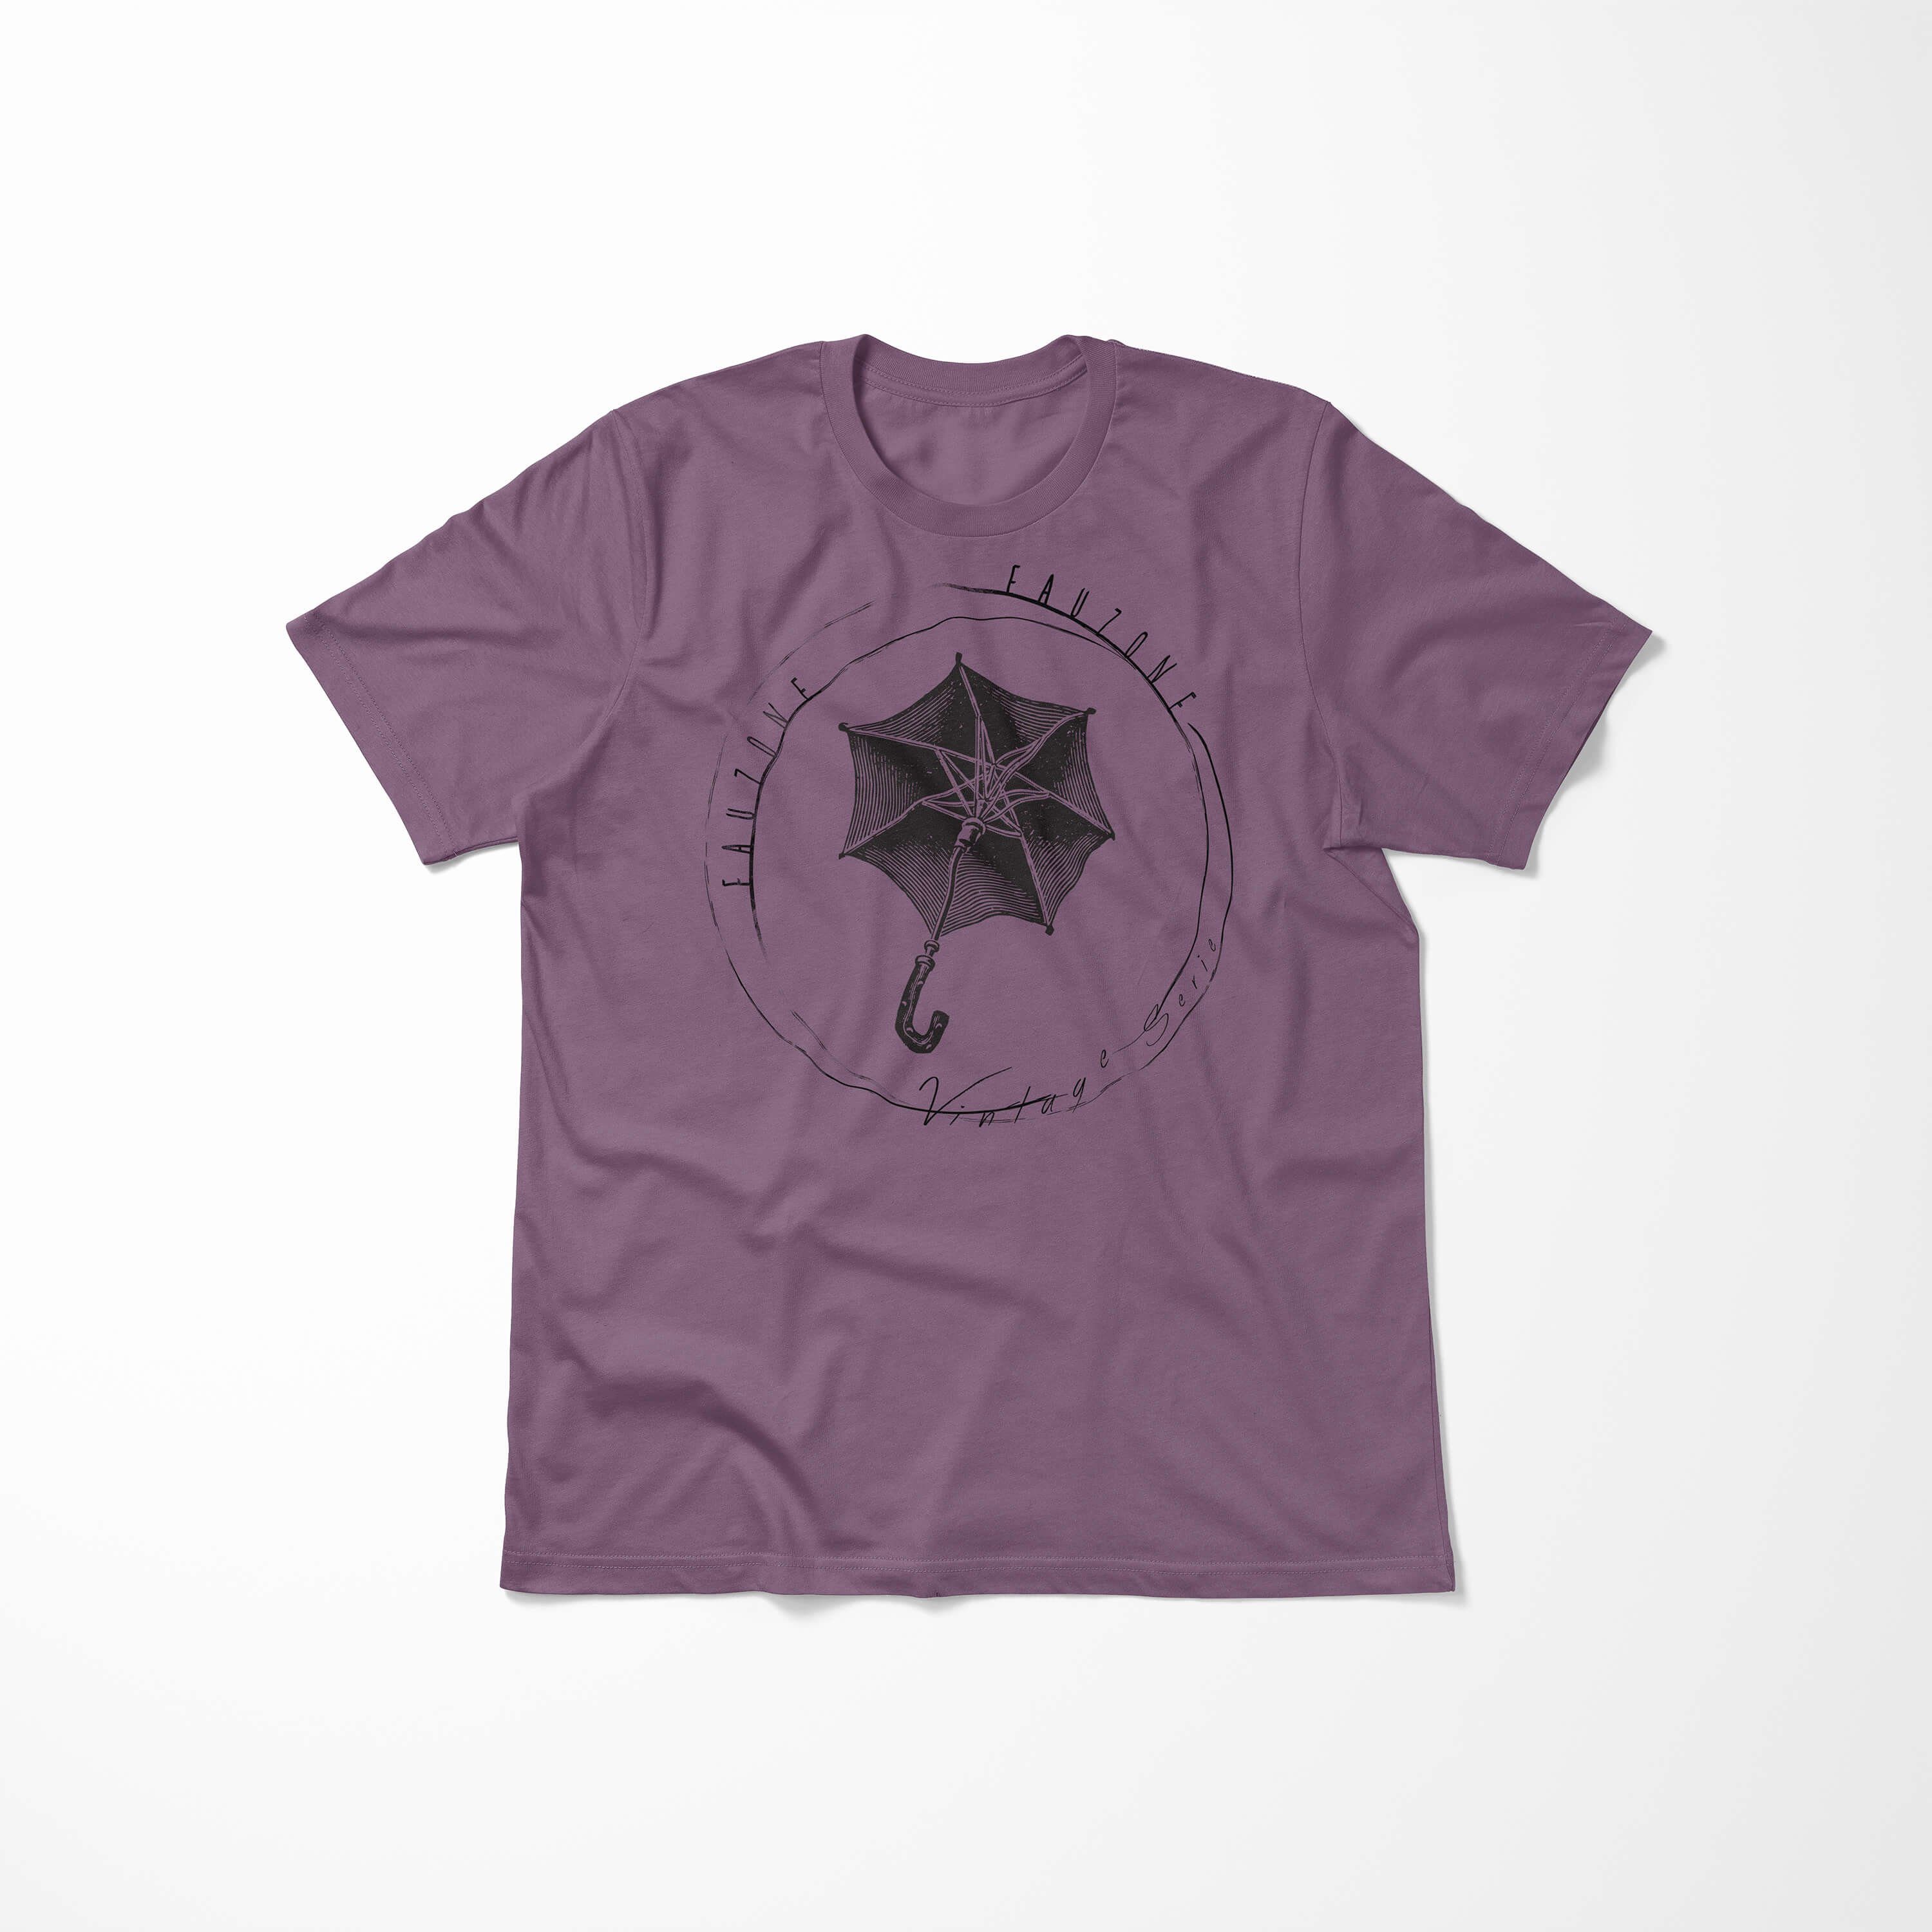 Shiraz Art Sinus Regenschirm T-Shirt Vintage Herren T-Shirt